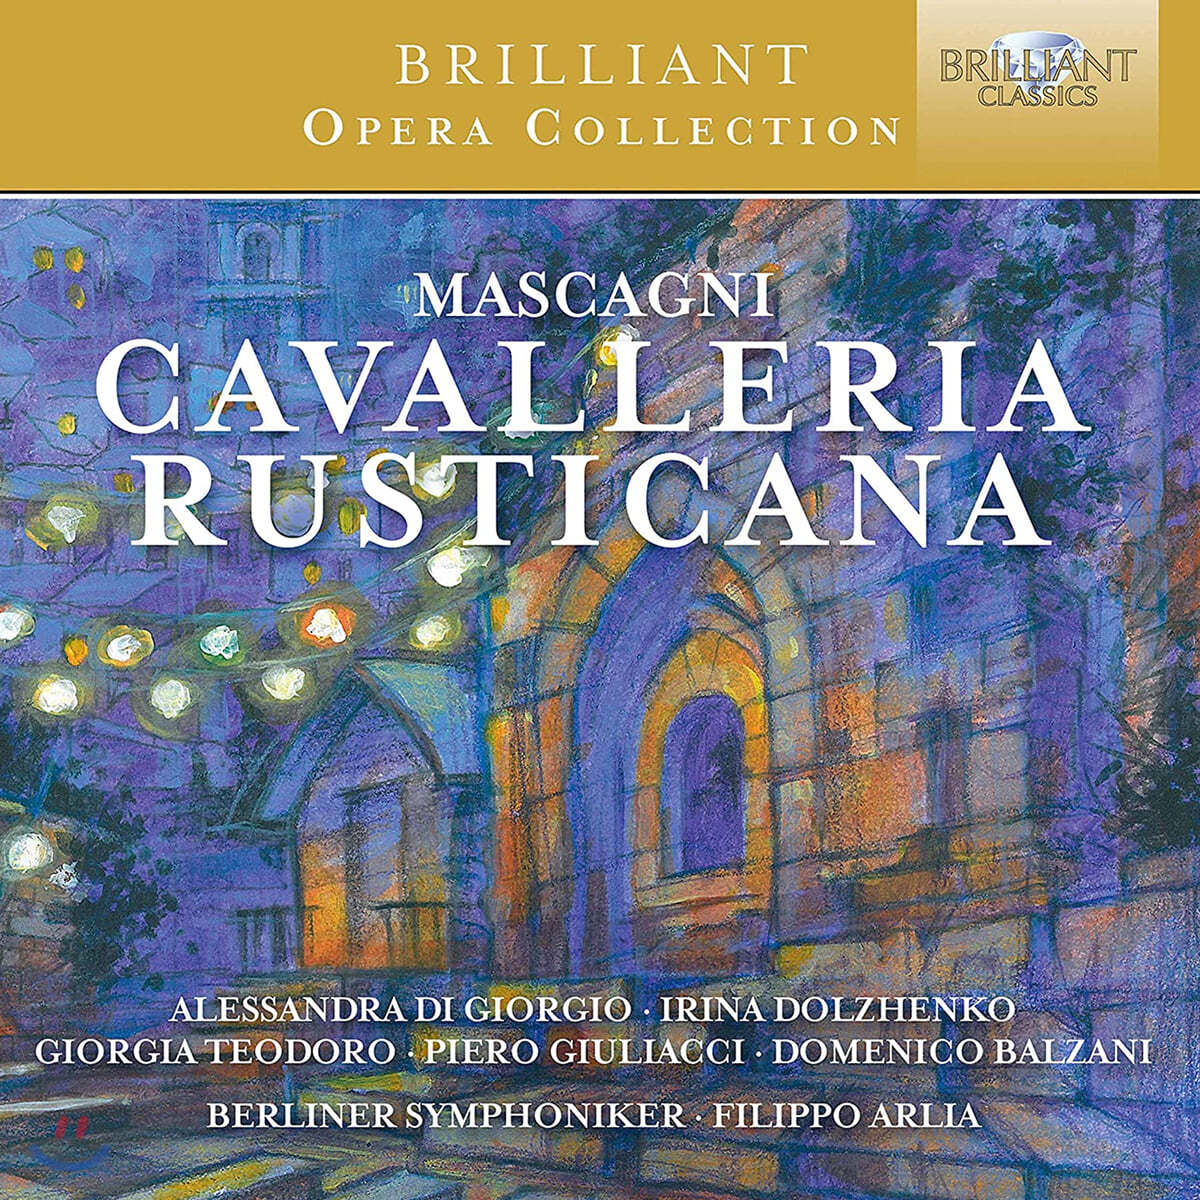 Piero Giuliacci 마스카니: 오페라 '카발레리아 루스티카나' (Pietro Mascagni: Cavalleria Rusticana) 